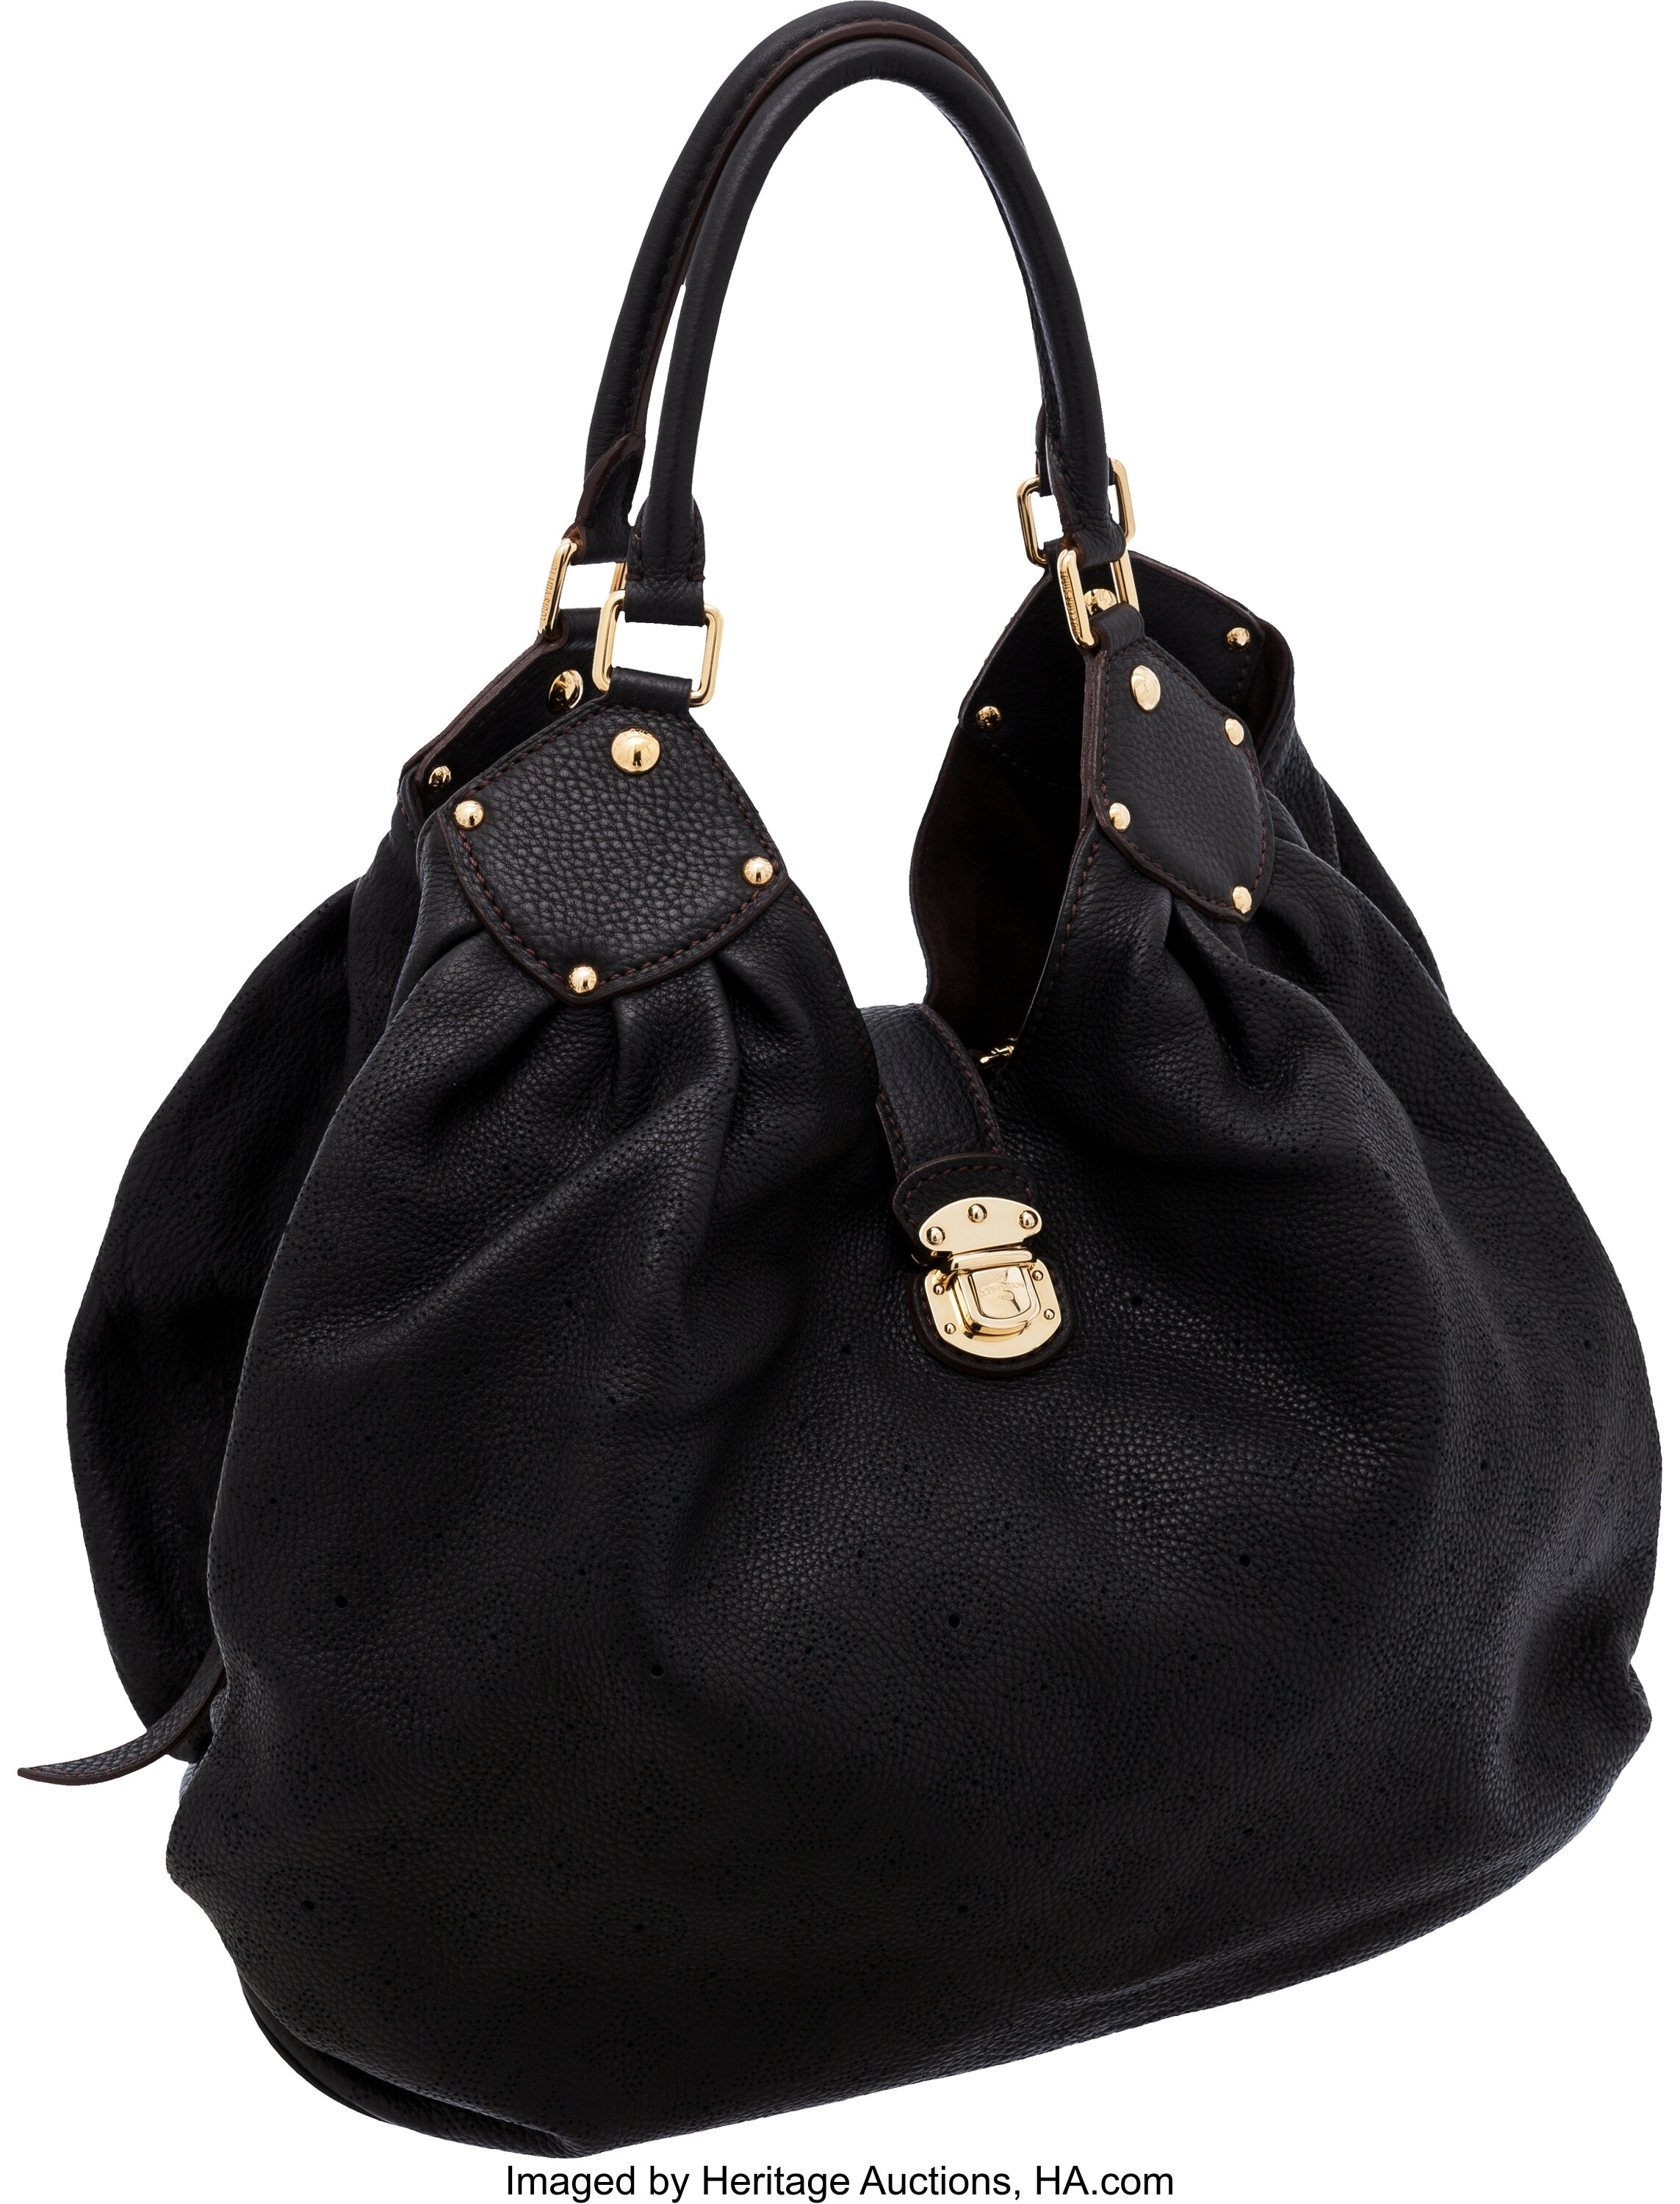 Sold at Auction: A Vintage Louis Vuitton Mahina Tote Bag